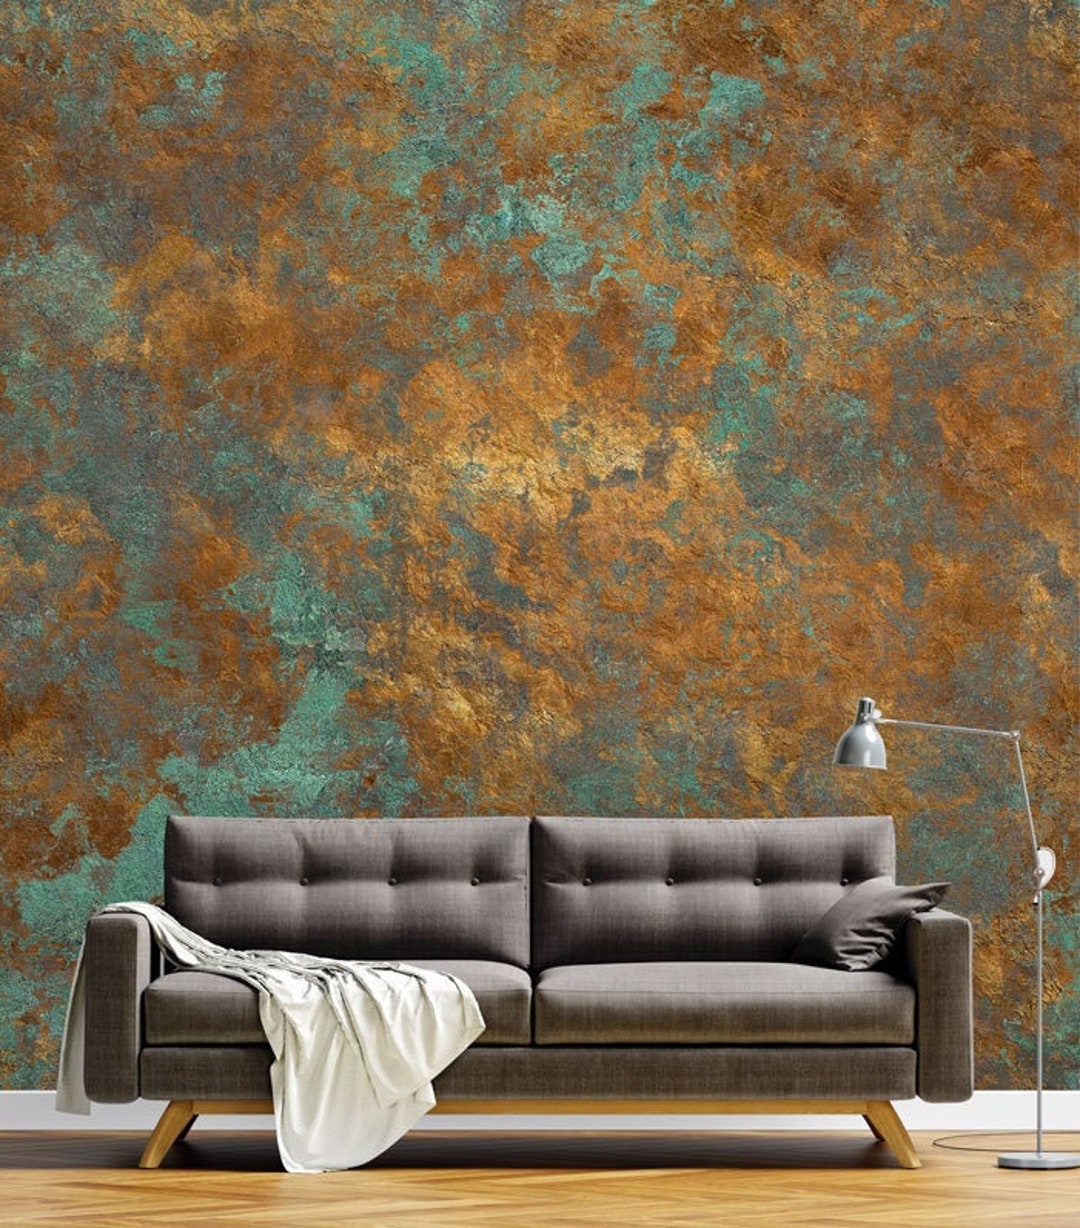 Buy Rusty Look Copper Wallpaper Mural Self Adhesive Green Online in India   Etsy